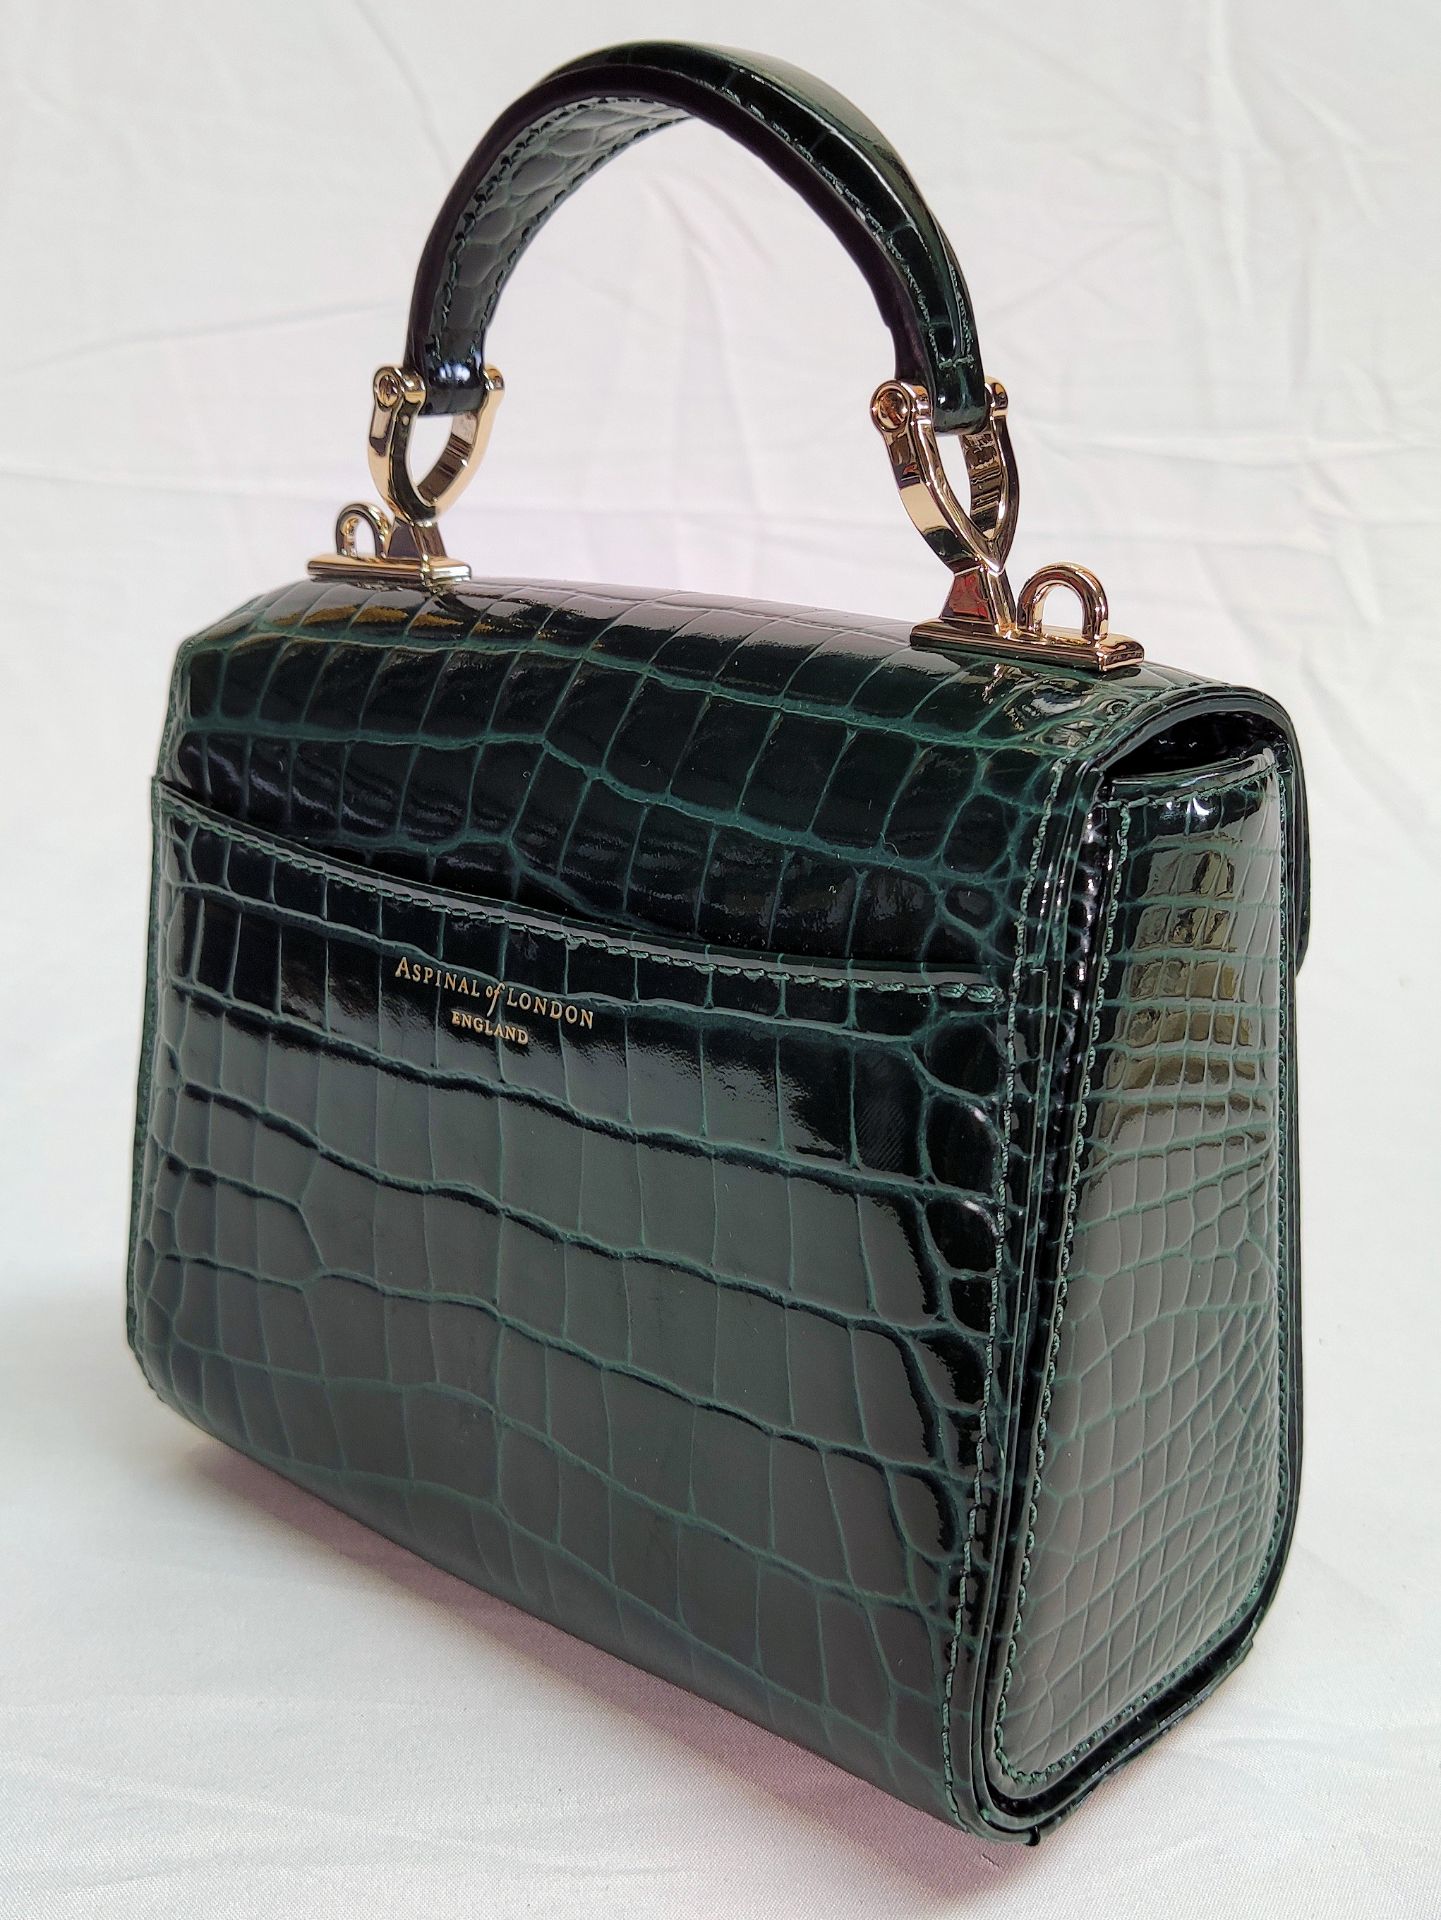 1 x ASPINAL OF LONDON Mayfair Mini Bag - Evergreen Patent Croc - Boxed - Original RRP £495 - Ref: - Image 12 of 21